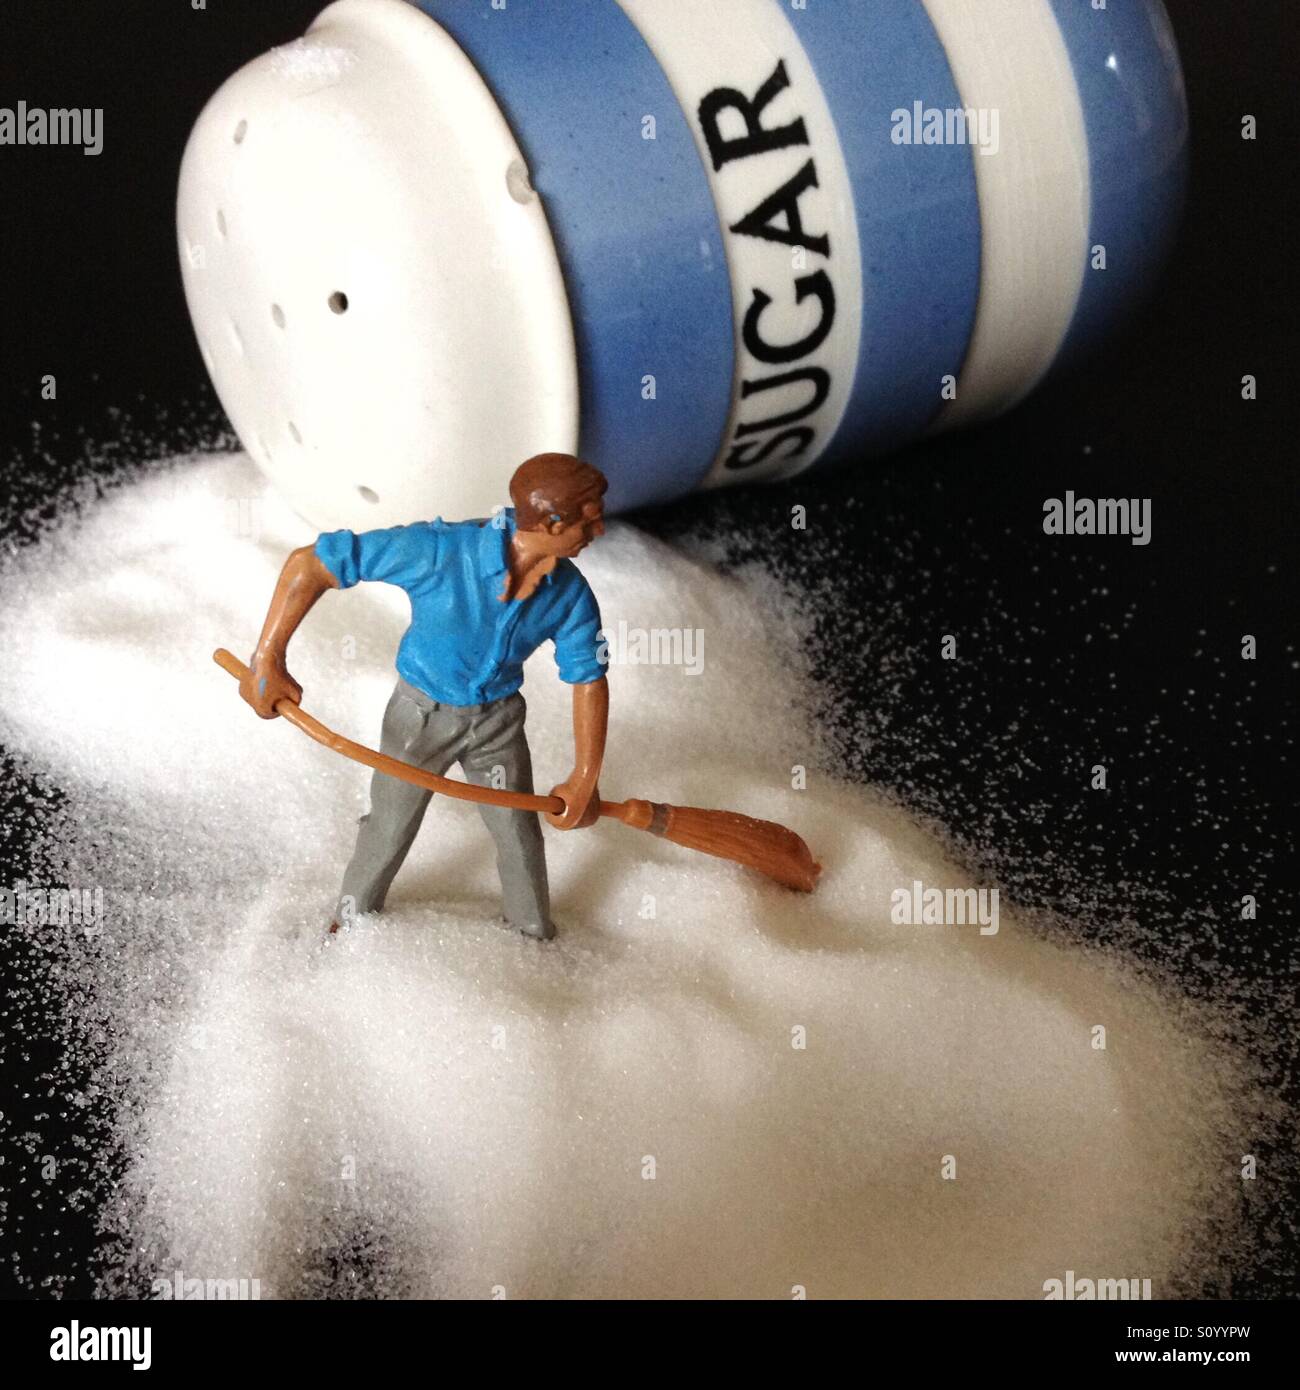 Man dealing with sugar spillage Stock Photo